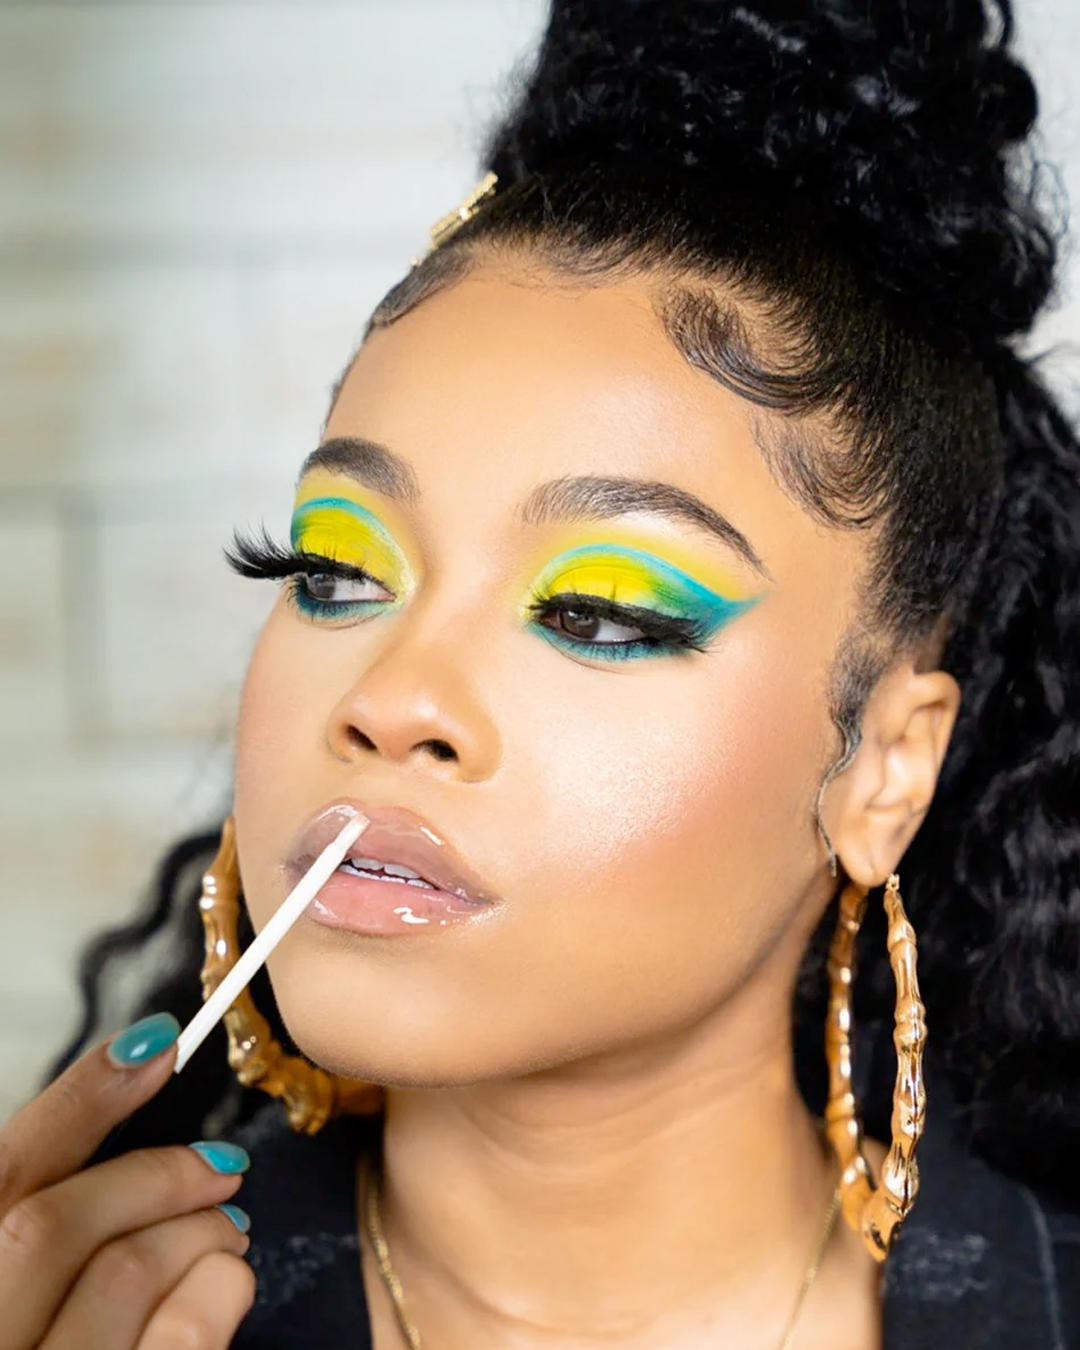 Destiny Jones wearing Glaze Clear LipShine and eyeshadow from The Graffiti Eyeshadow Palette.